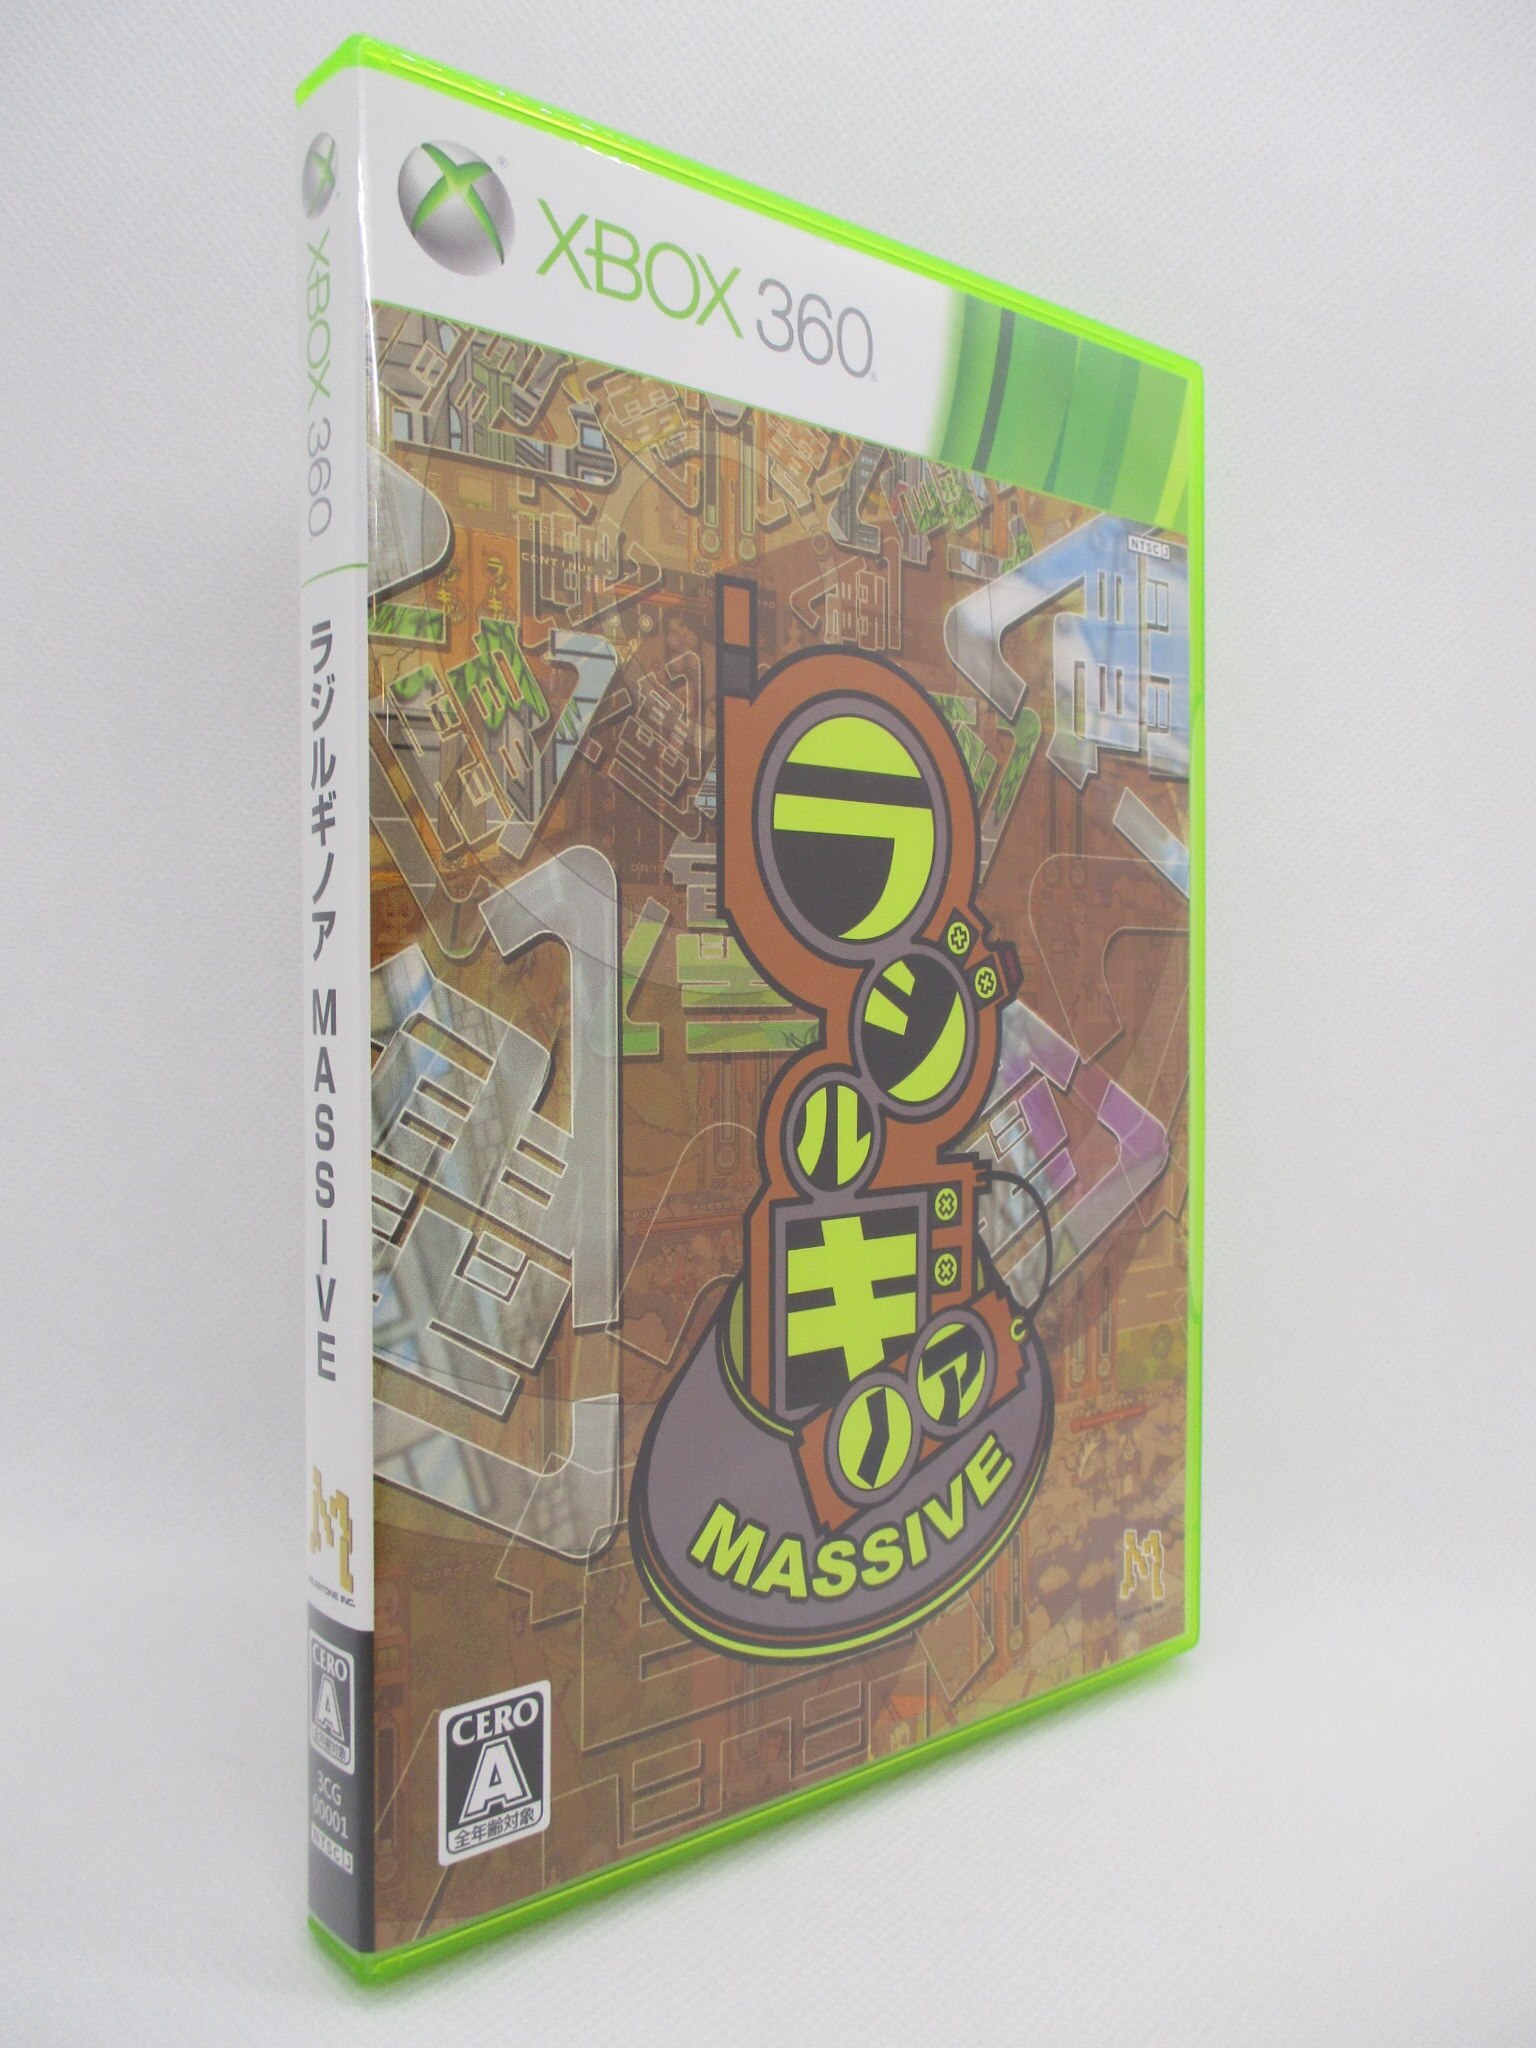 Xbox360 ラジルギノア MASSIVE 【新品未開封】